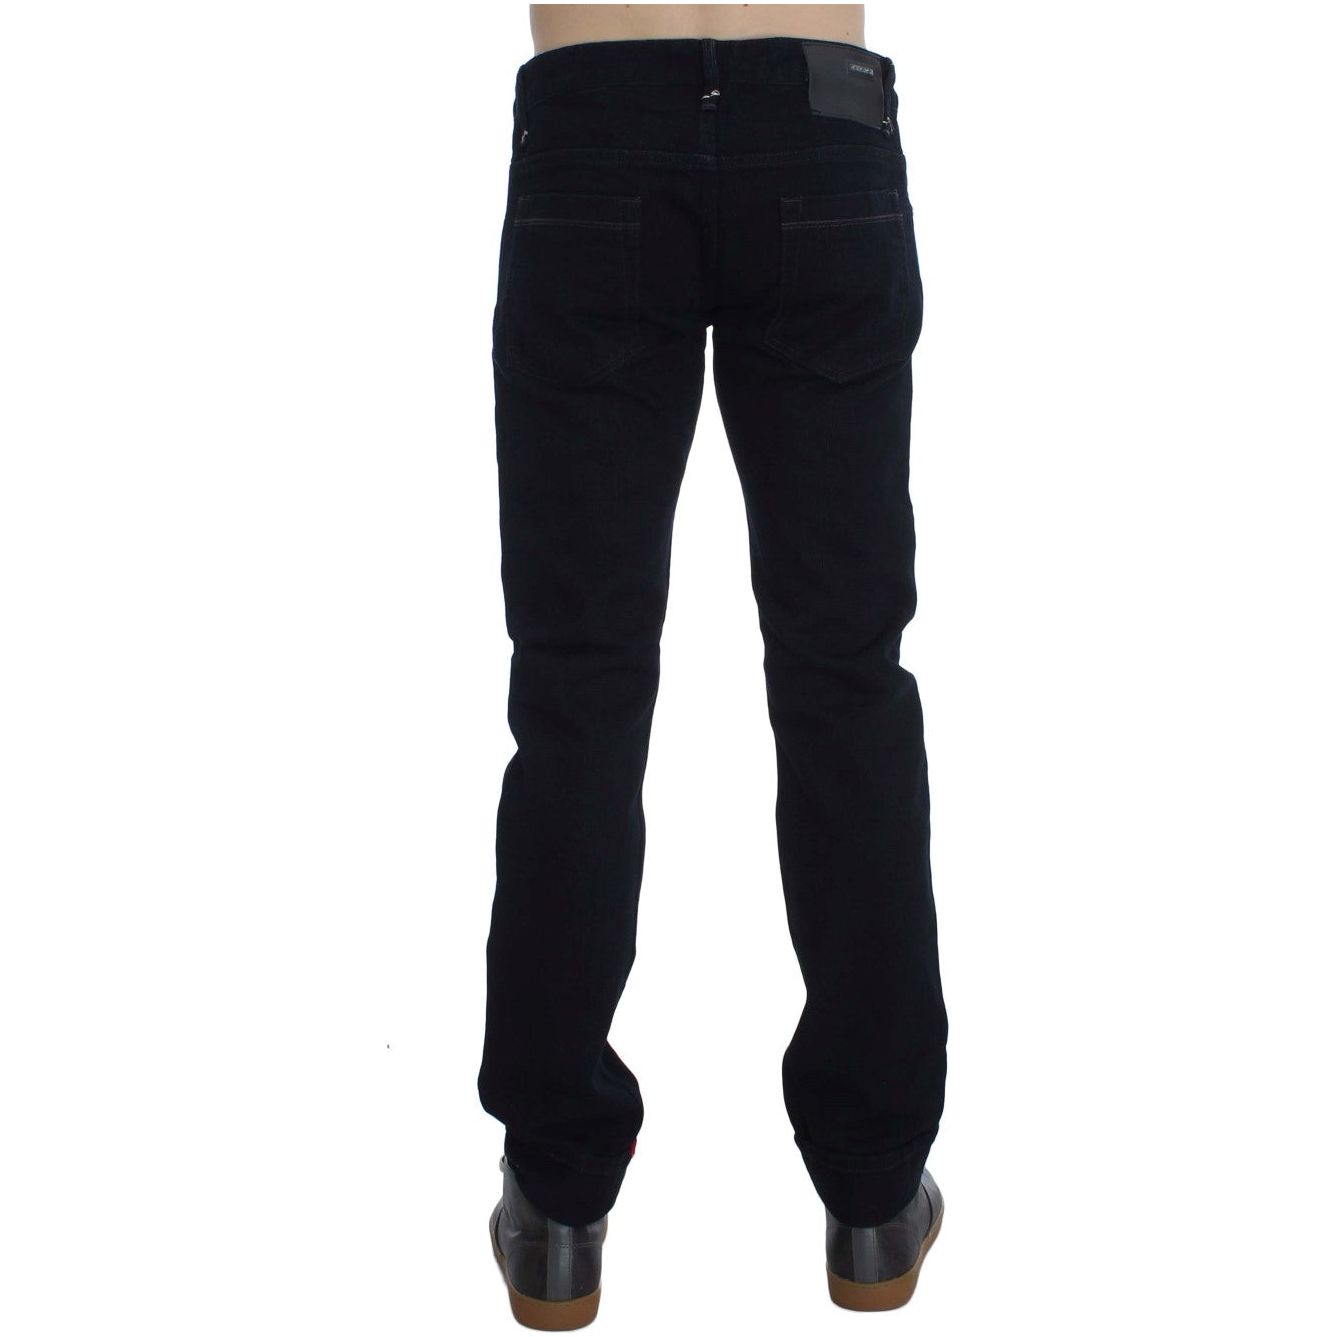 Acht Exquisite Slim Skinny Fit Men's Jeans dark-blue-corduroy-slim-skinny-fit-jeans 298973-dark-blue-corduroy-slim-skinny-fit-jeans-3.jpg